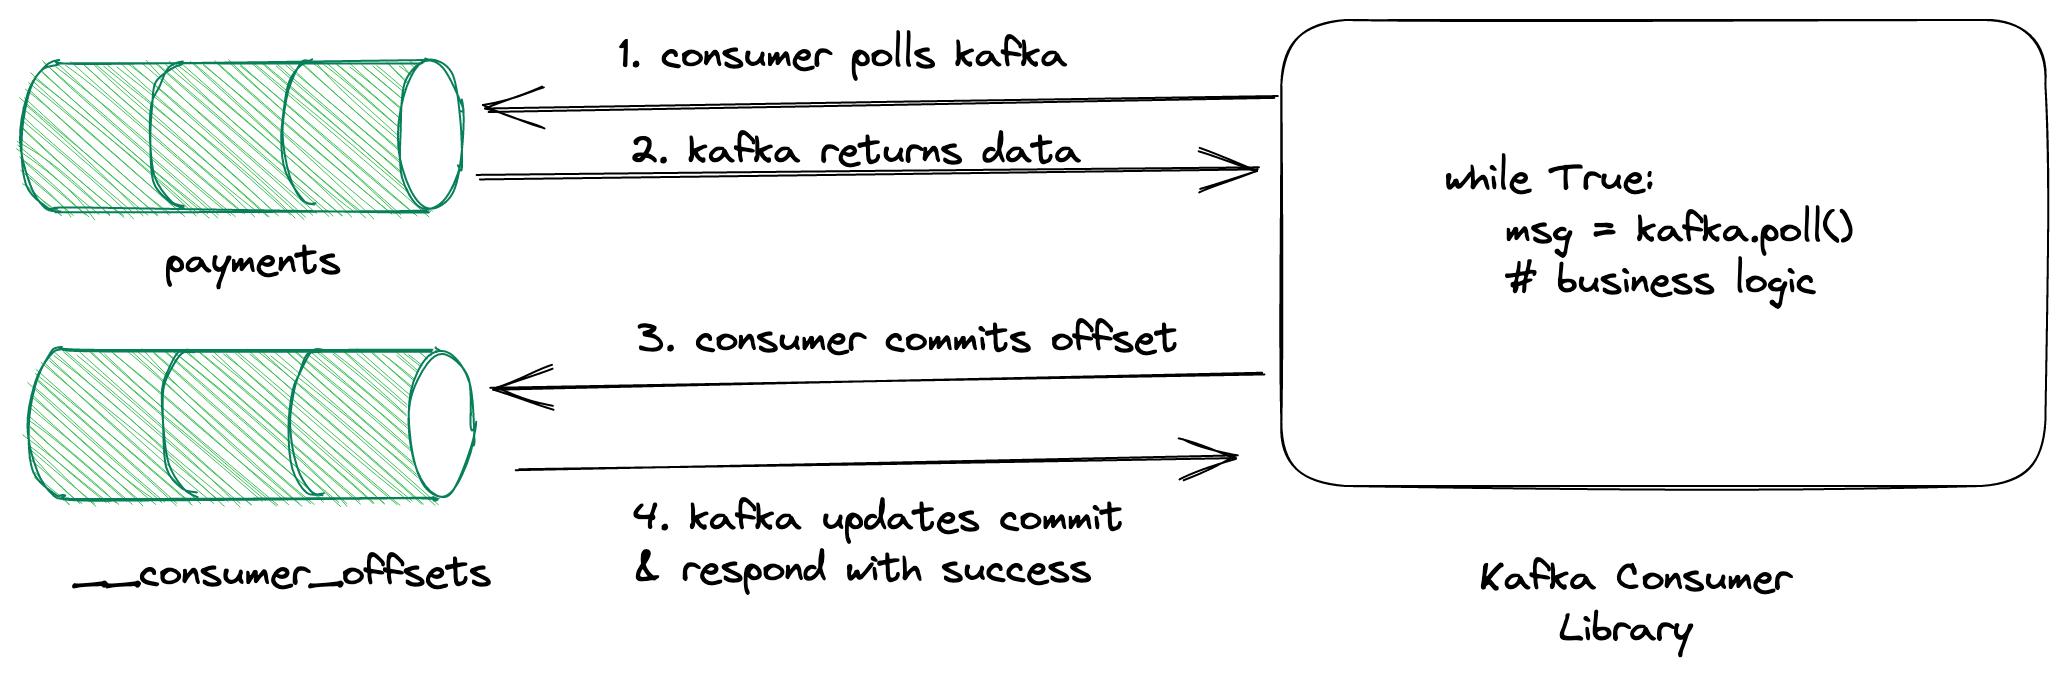 An image depicting the interaction between kafka broker and consumer